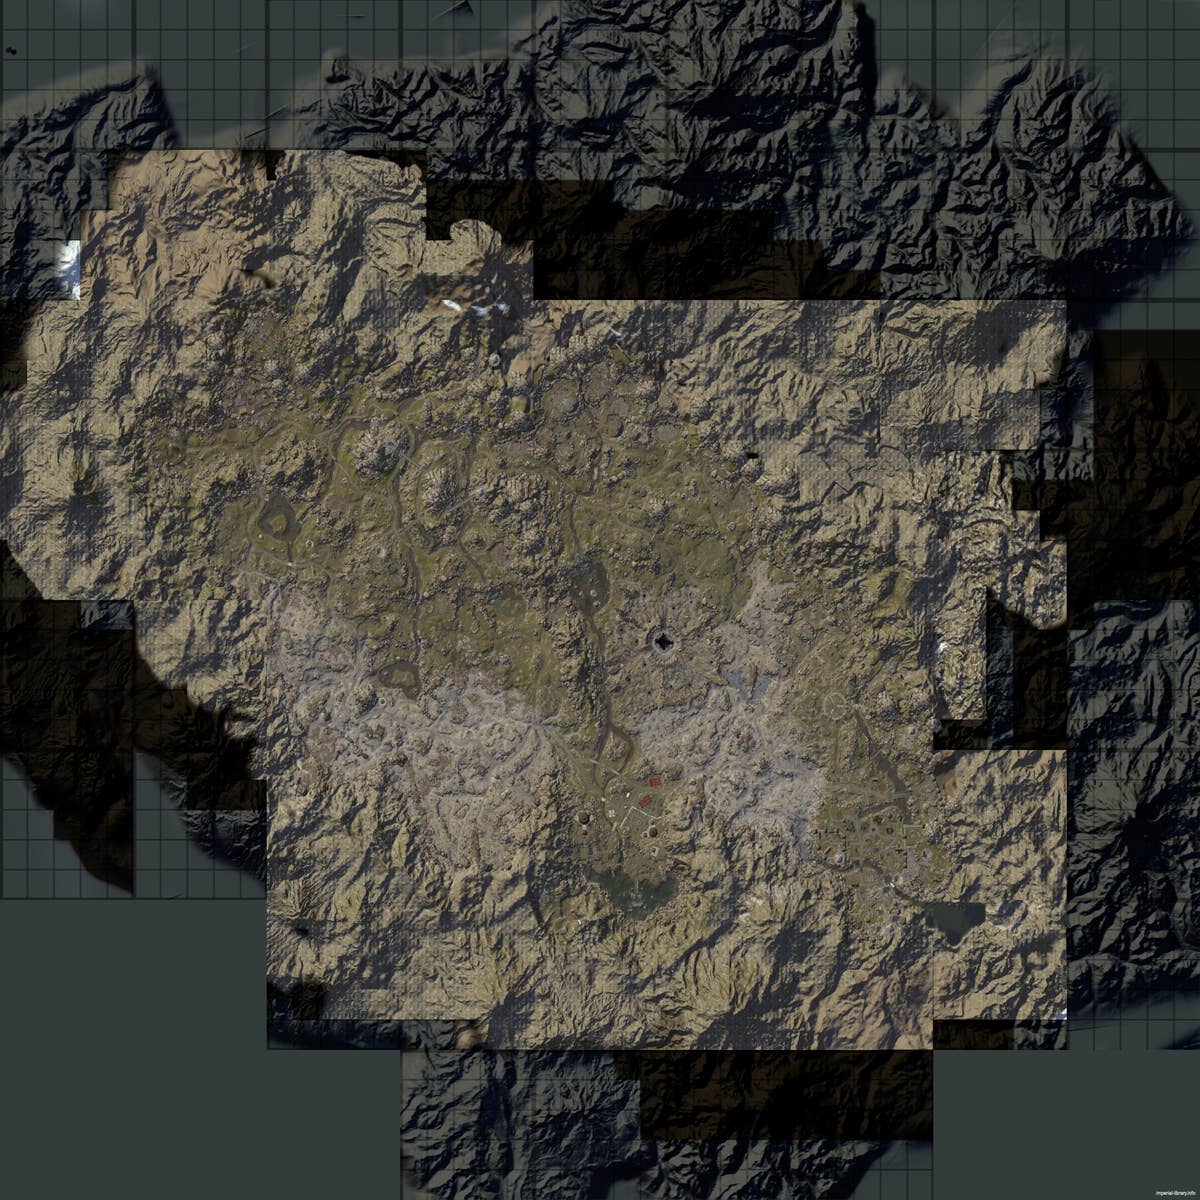 Elder Scrolls' High Rock: Possible TES 6 Location Explained